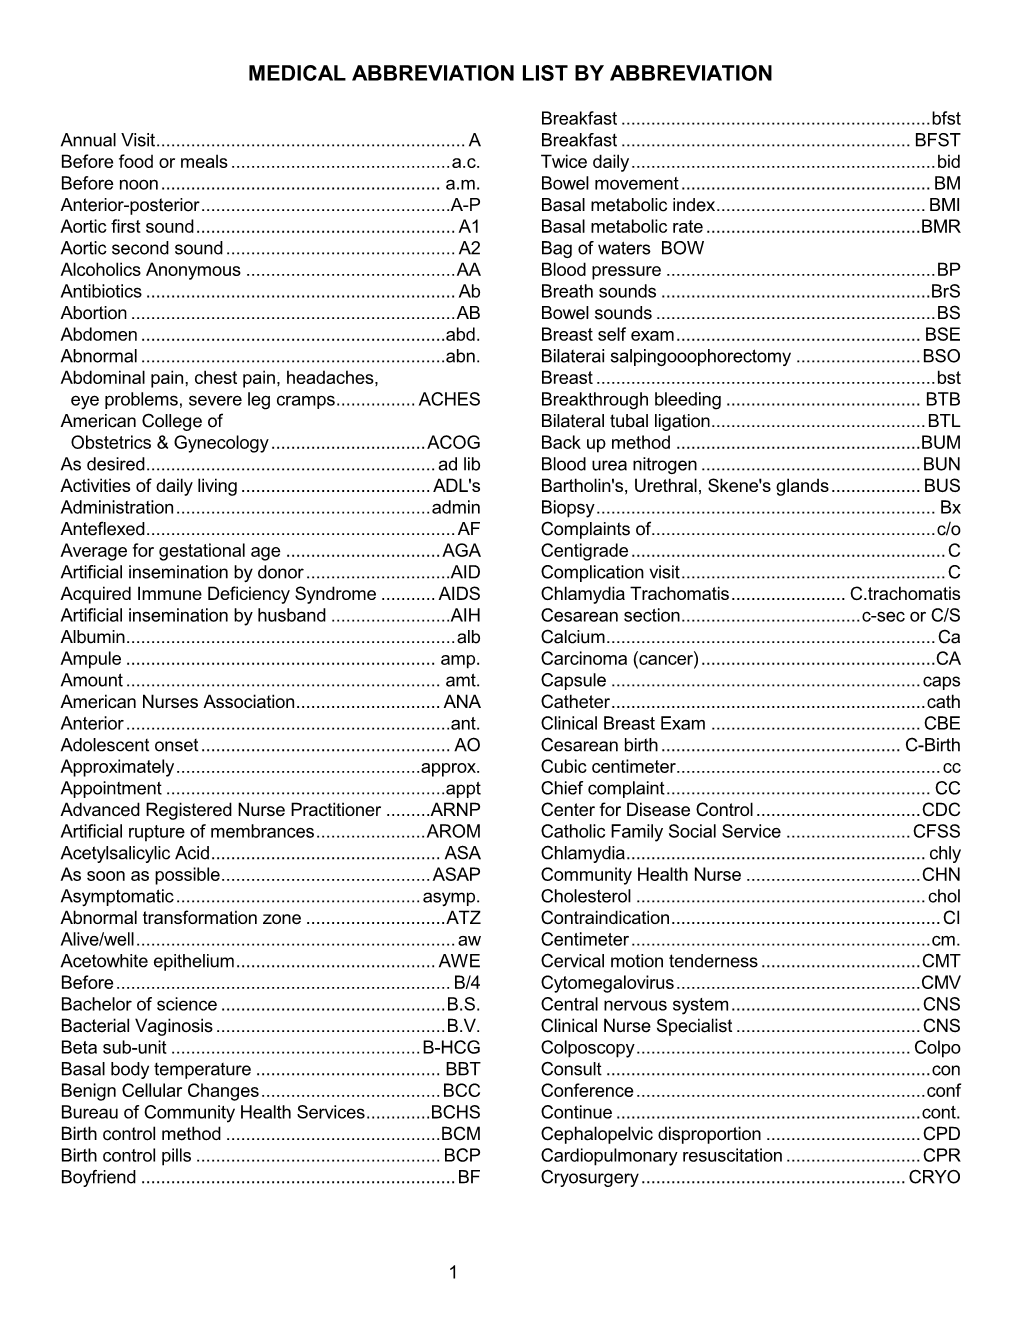 Medical Abbreviation List by Abbreviation